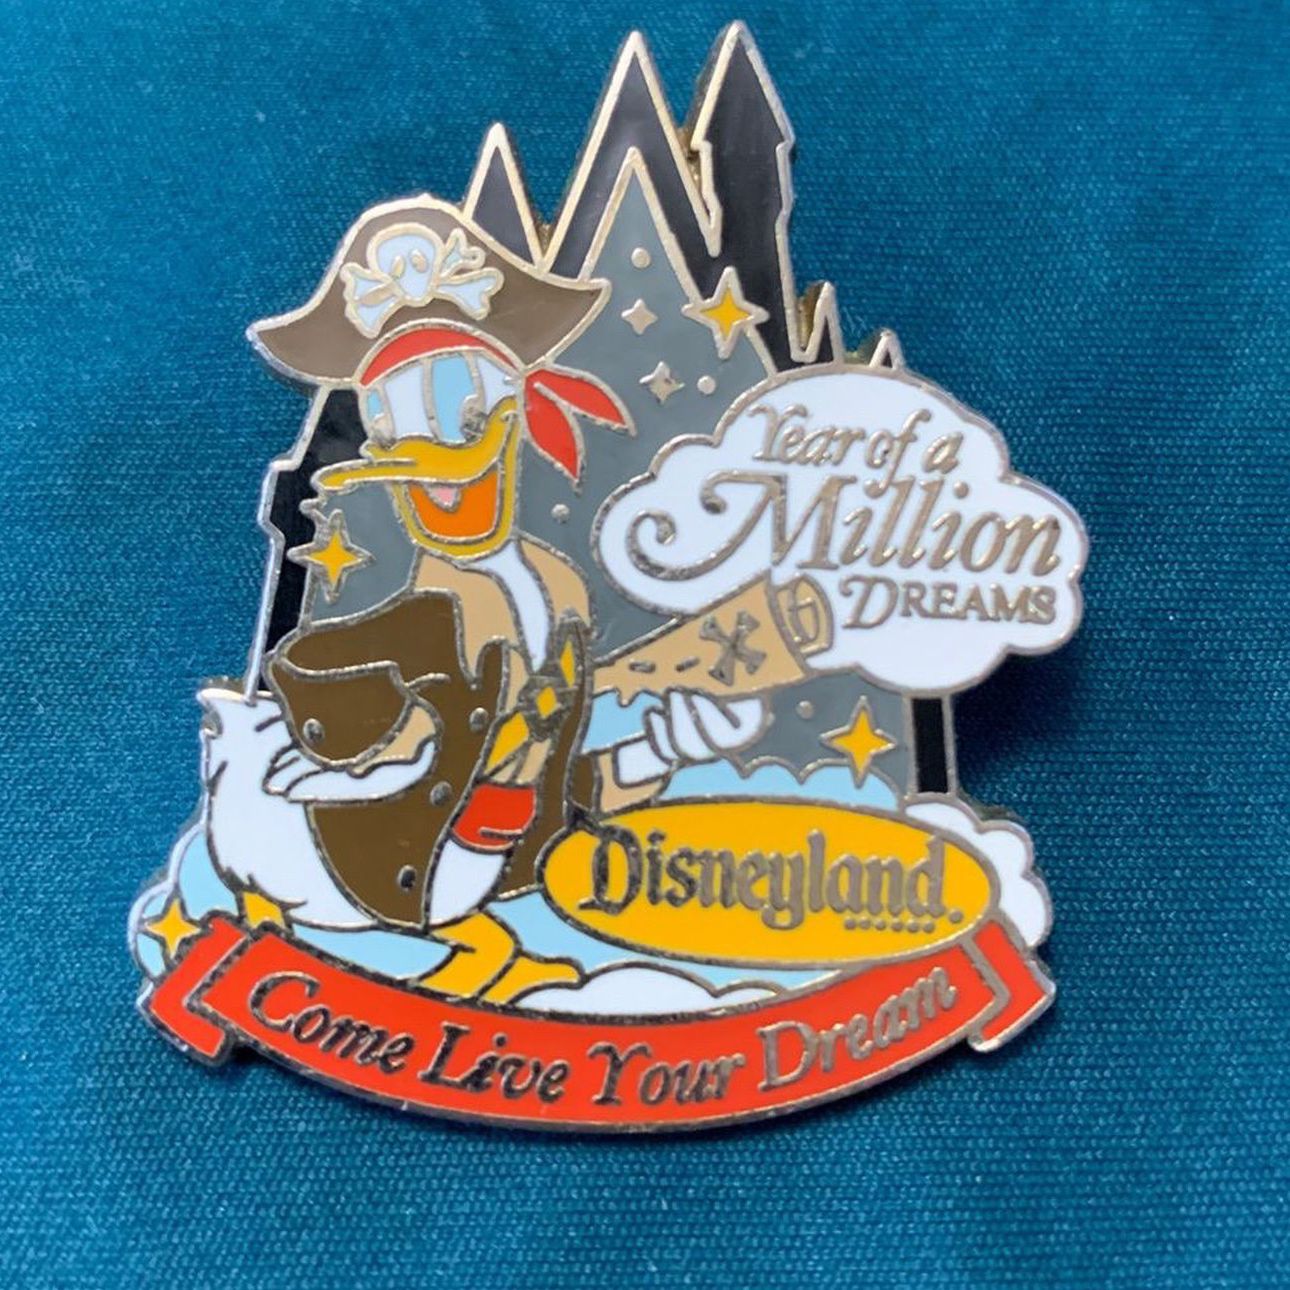 2 Disneyland Pins: Year of a Million Dreams & Puerto Vallarta